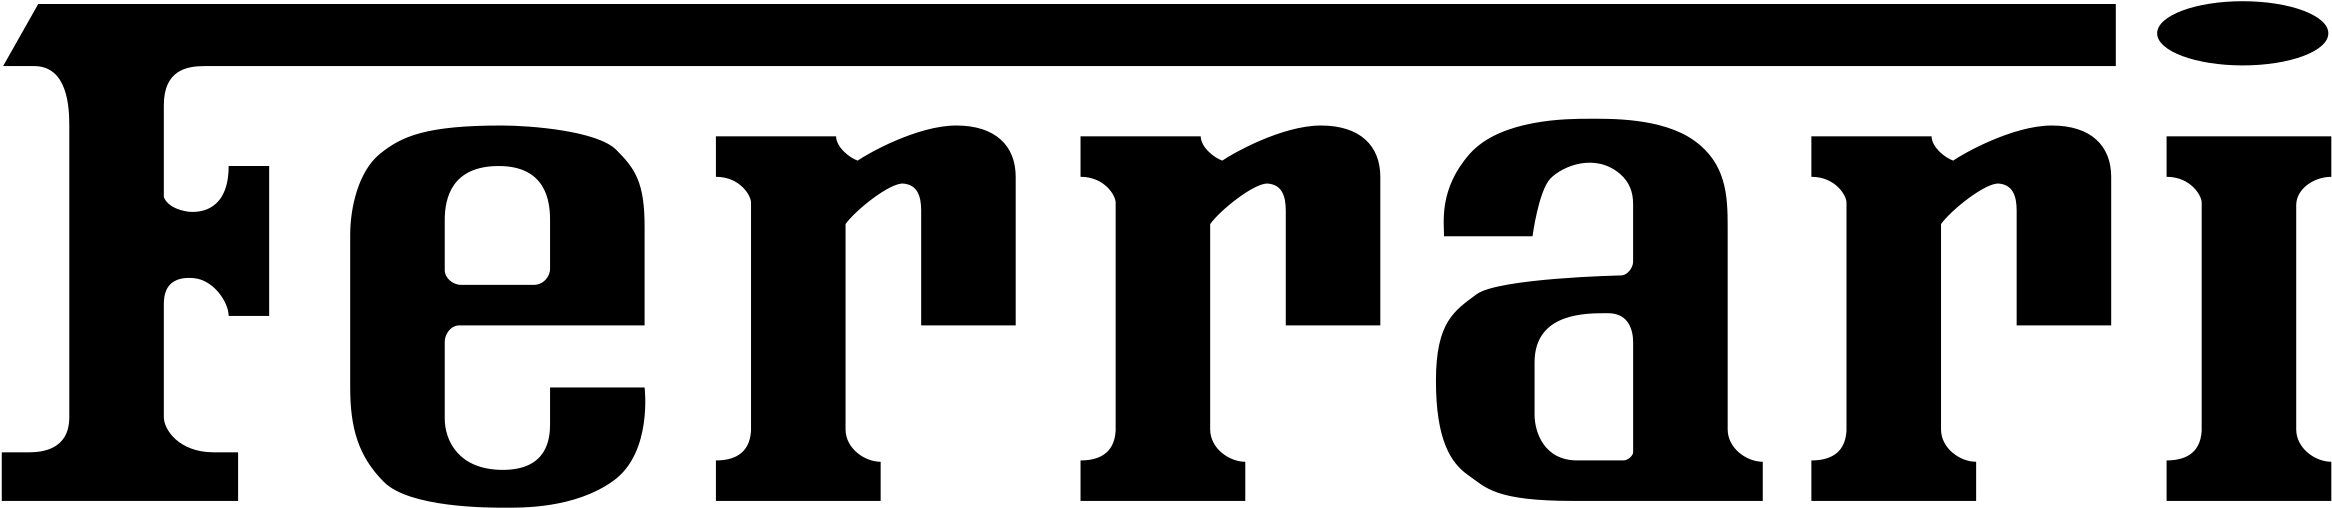 Ferrari Logo Text Black